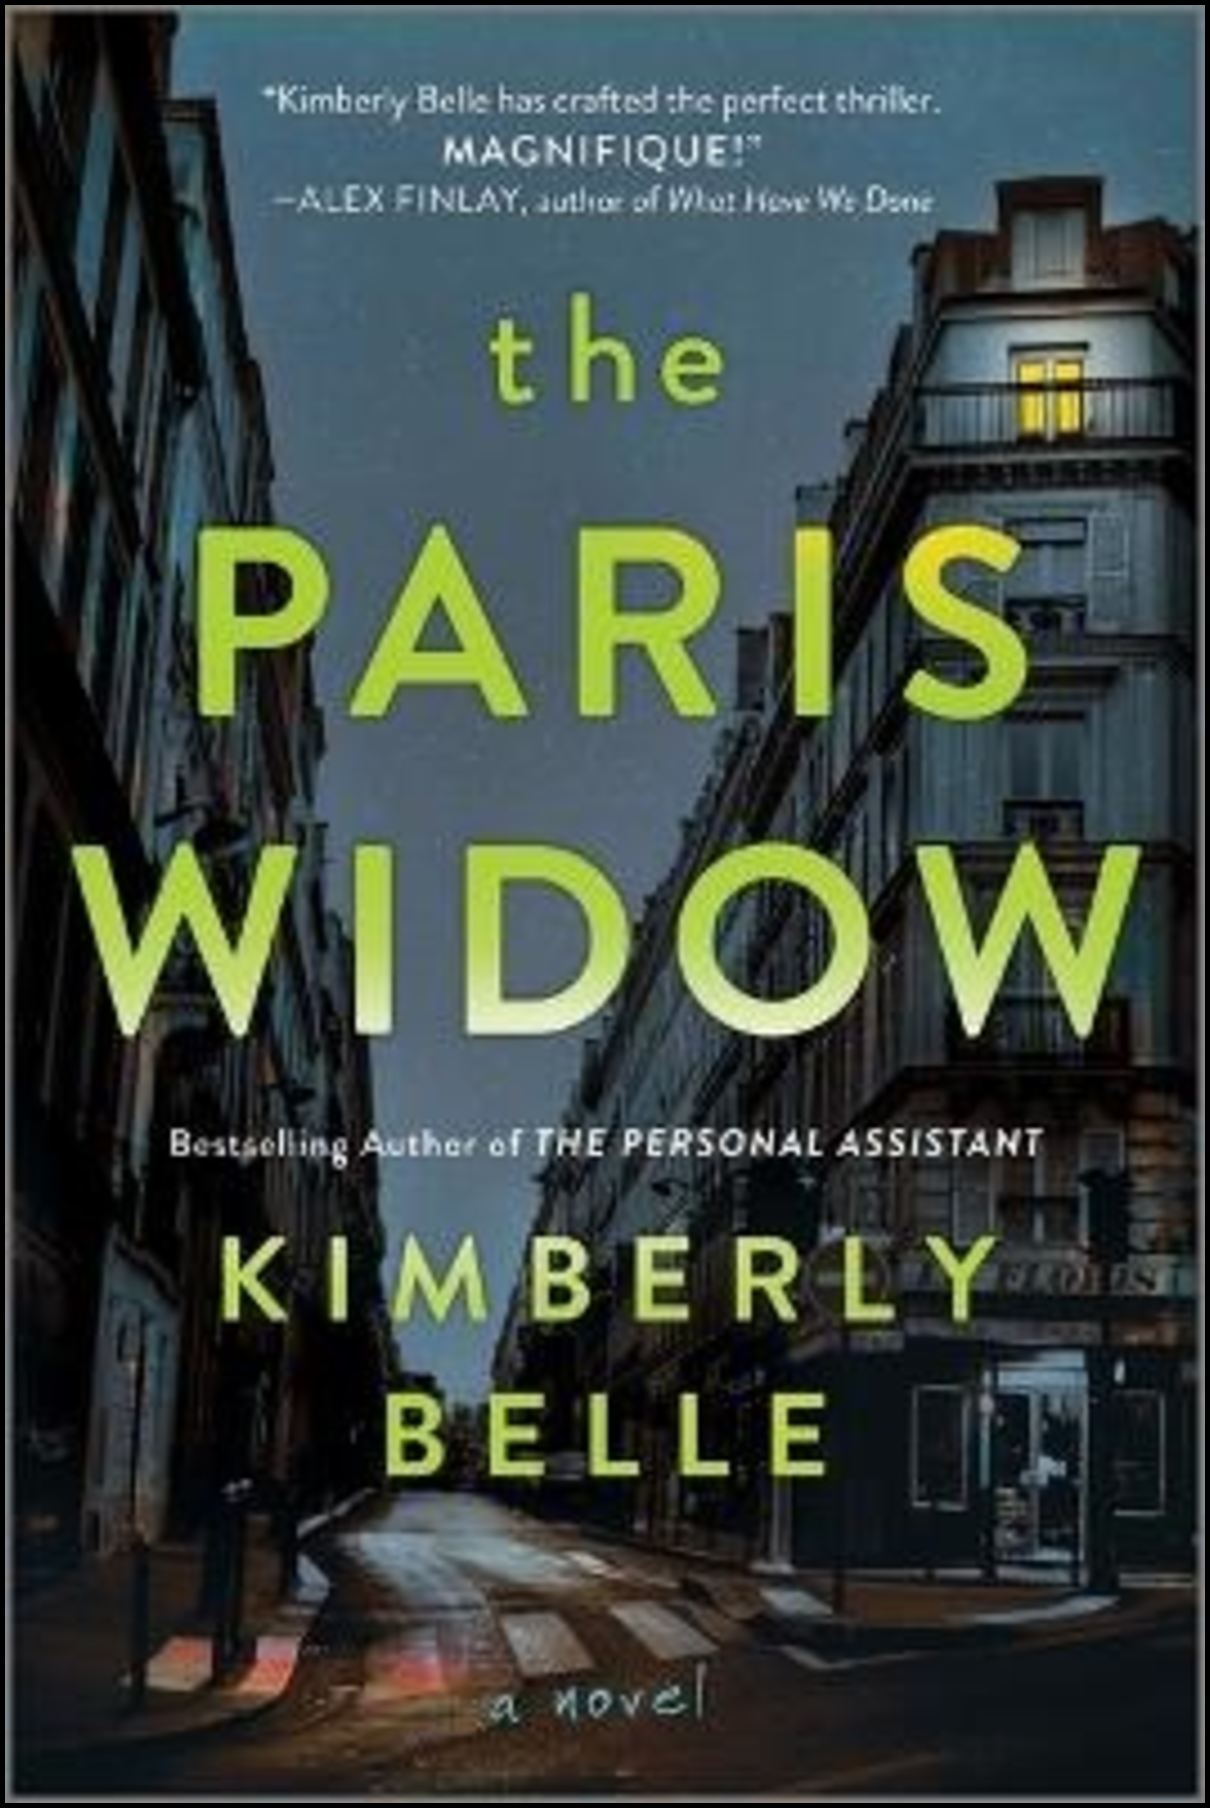 Belle, Kimberly | The Paris Widow